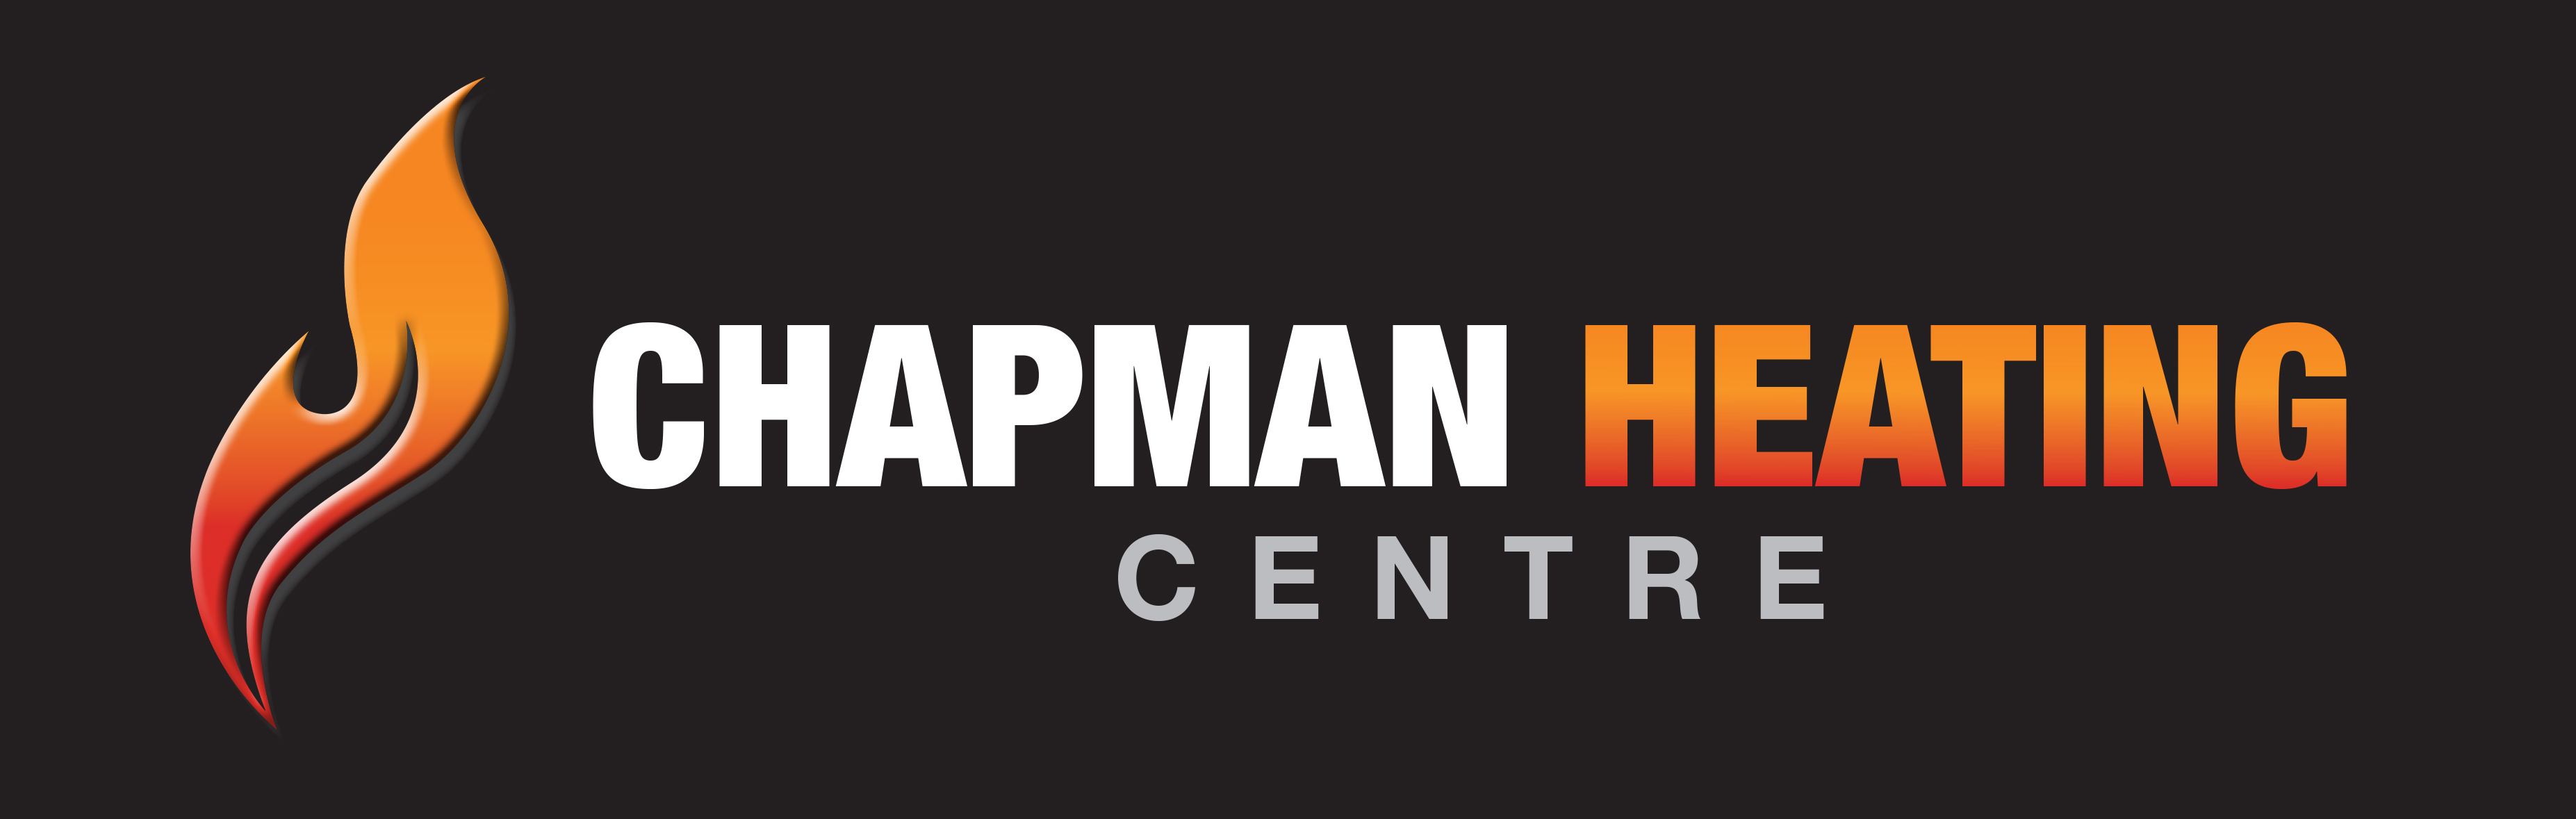 Chapman Heating Centre